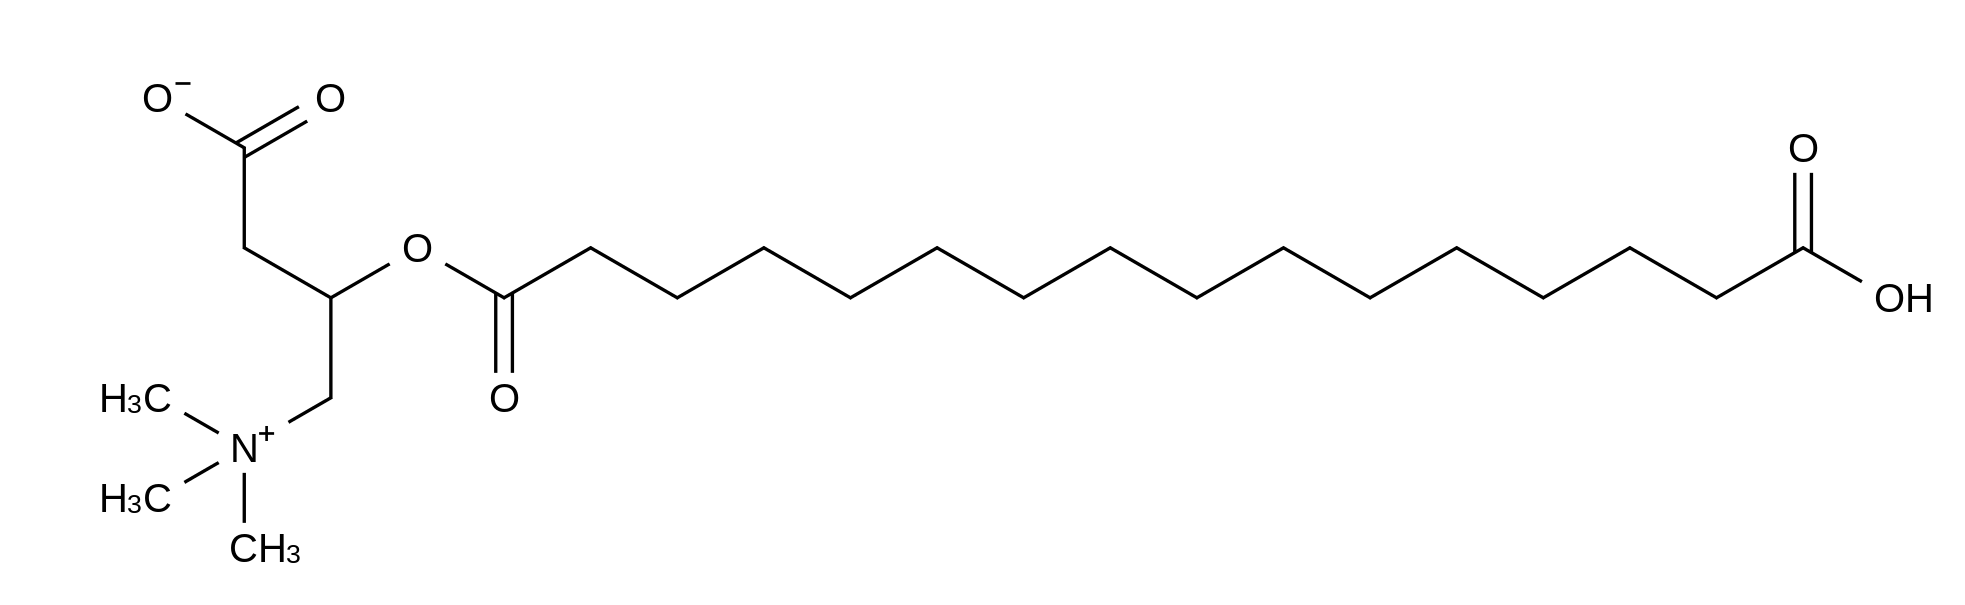 Hexadecanedioic acid mono-L-carnitine ester chloride